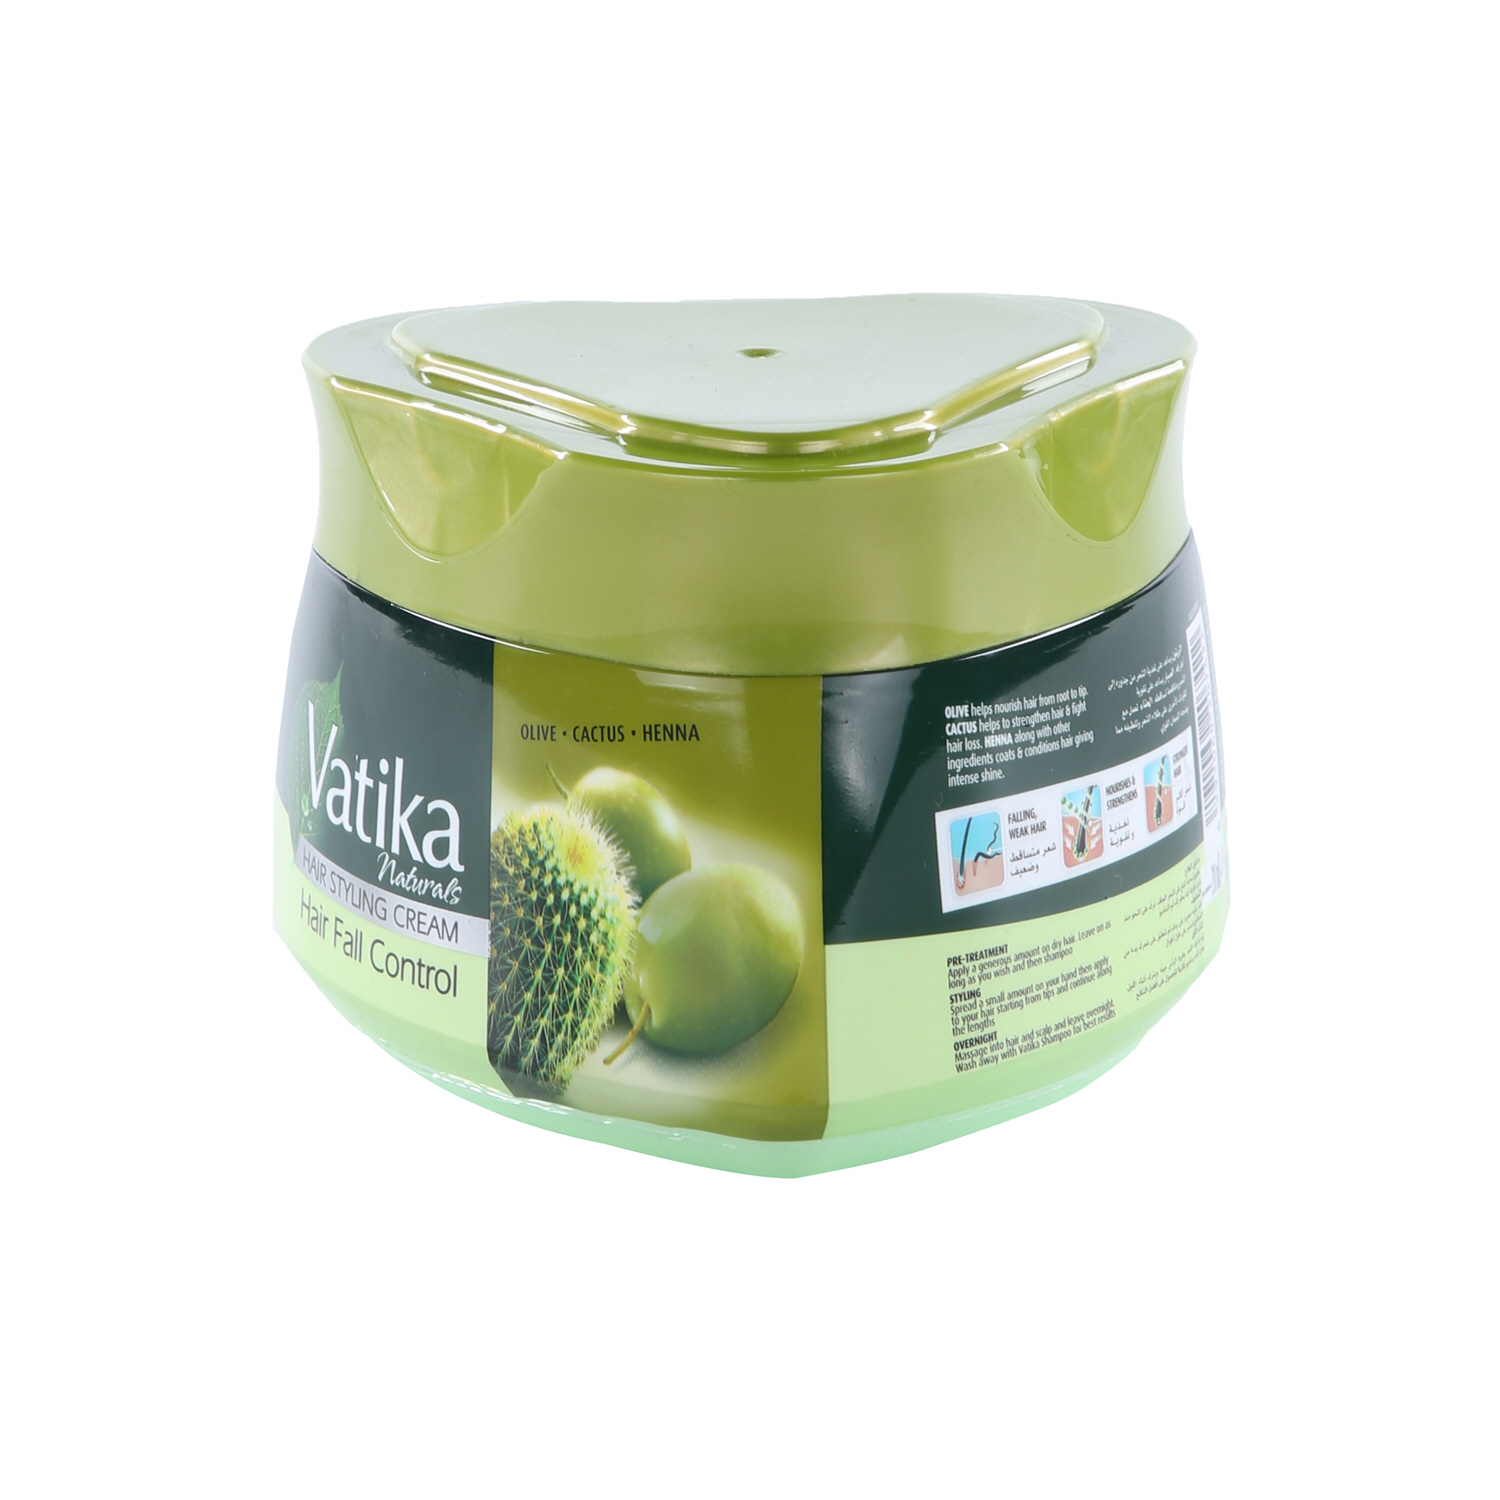 Dabur Vatika Hair Styling Cream Hair Fall Control Olive 210ml